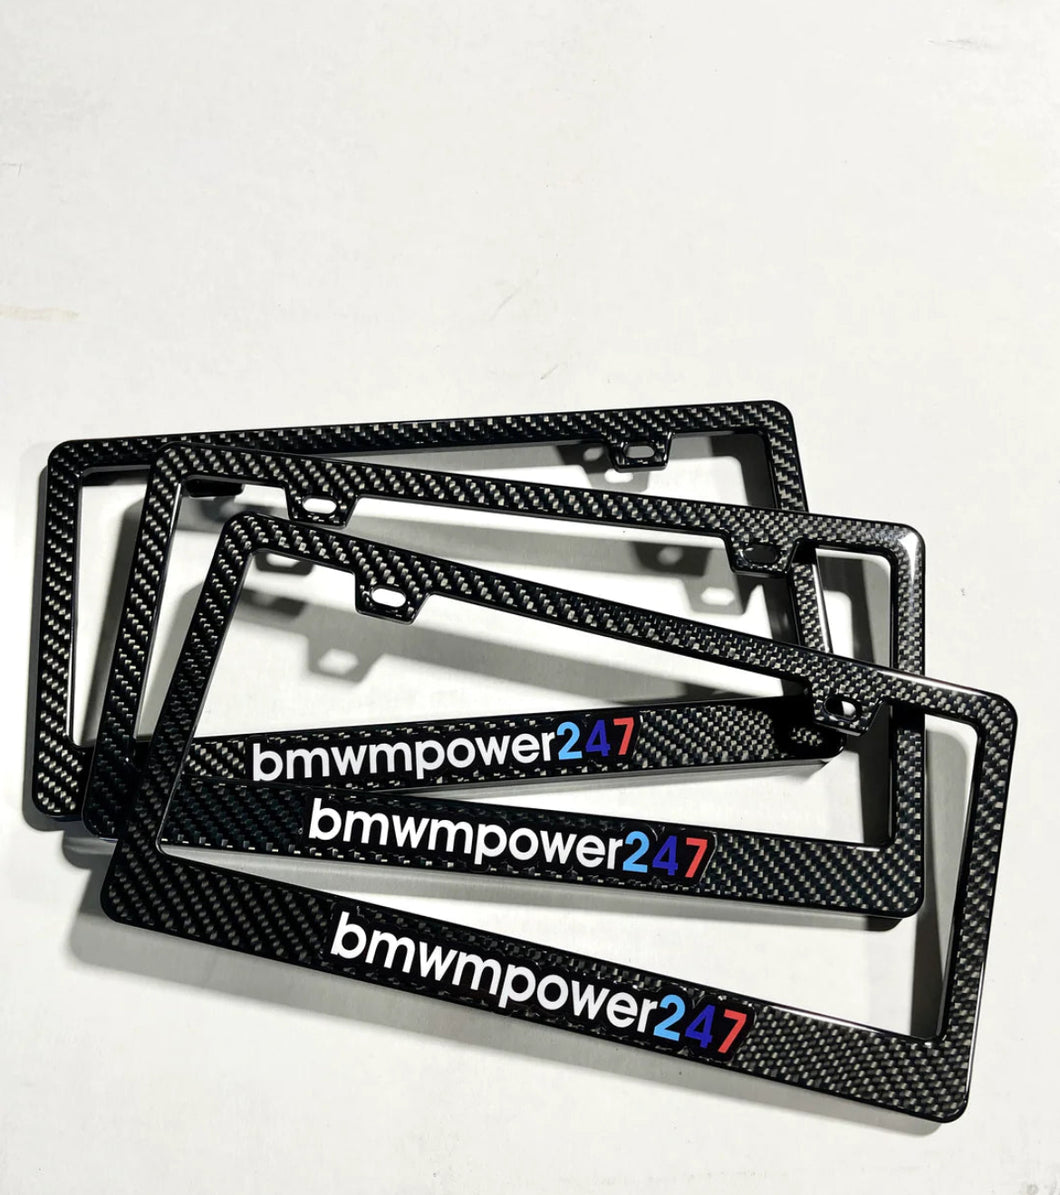 Bmwmpower247 Carbon Fiber License Plate Frame